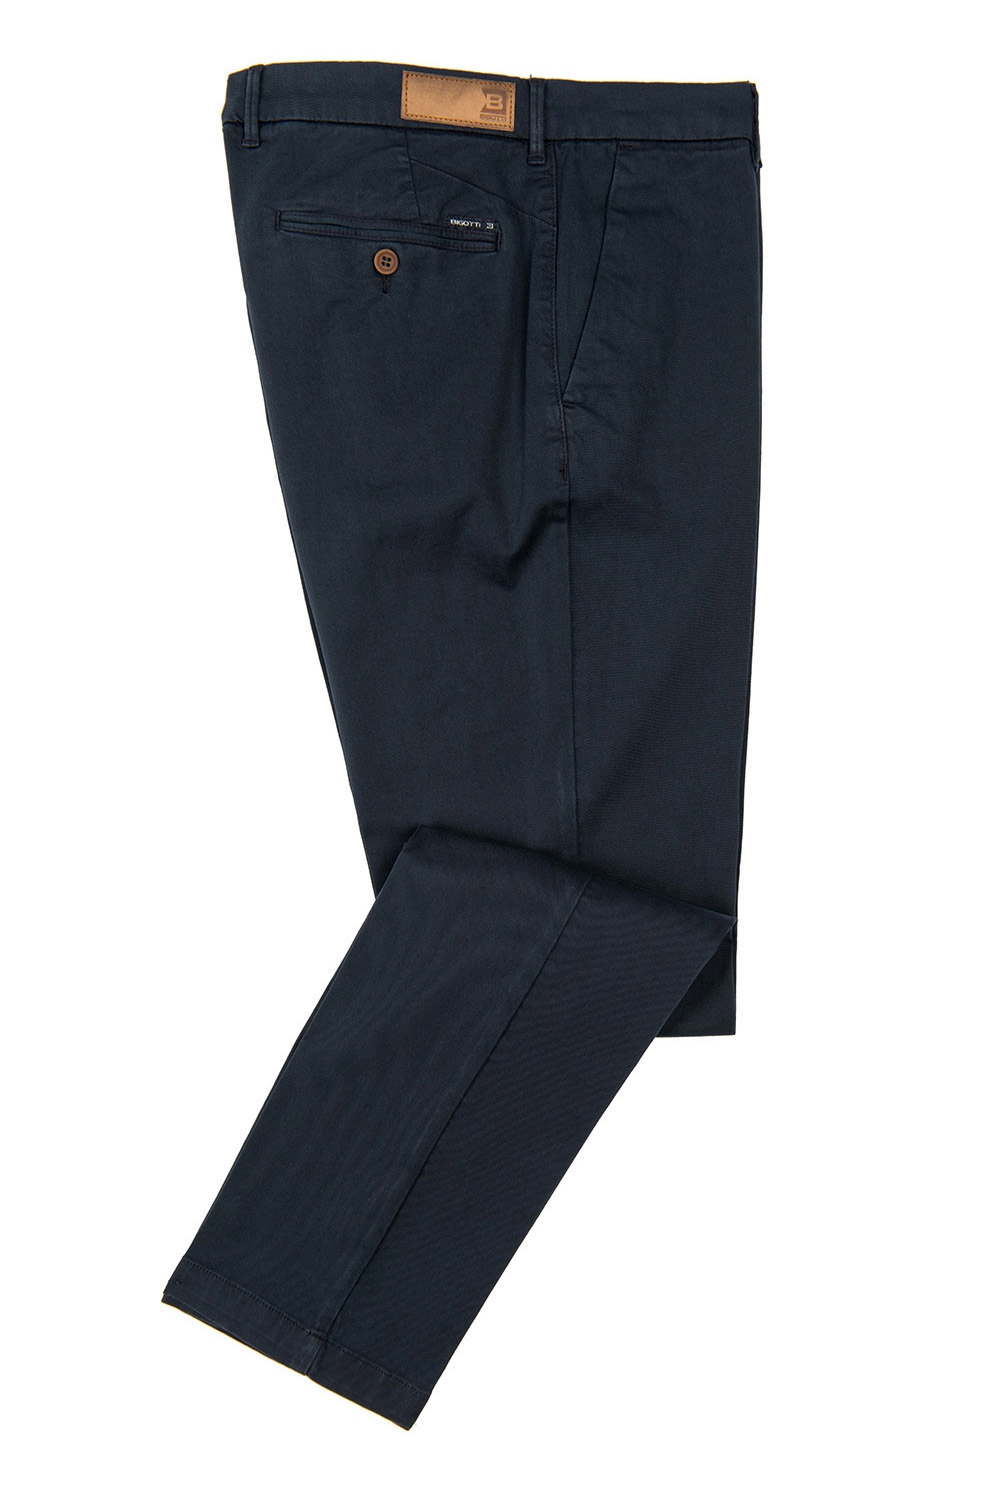 Pantaloni superslim marco bleumarin uni 0